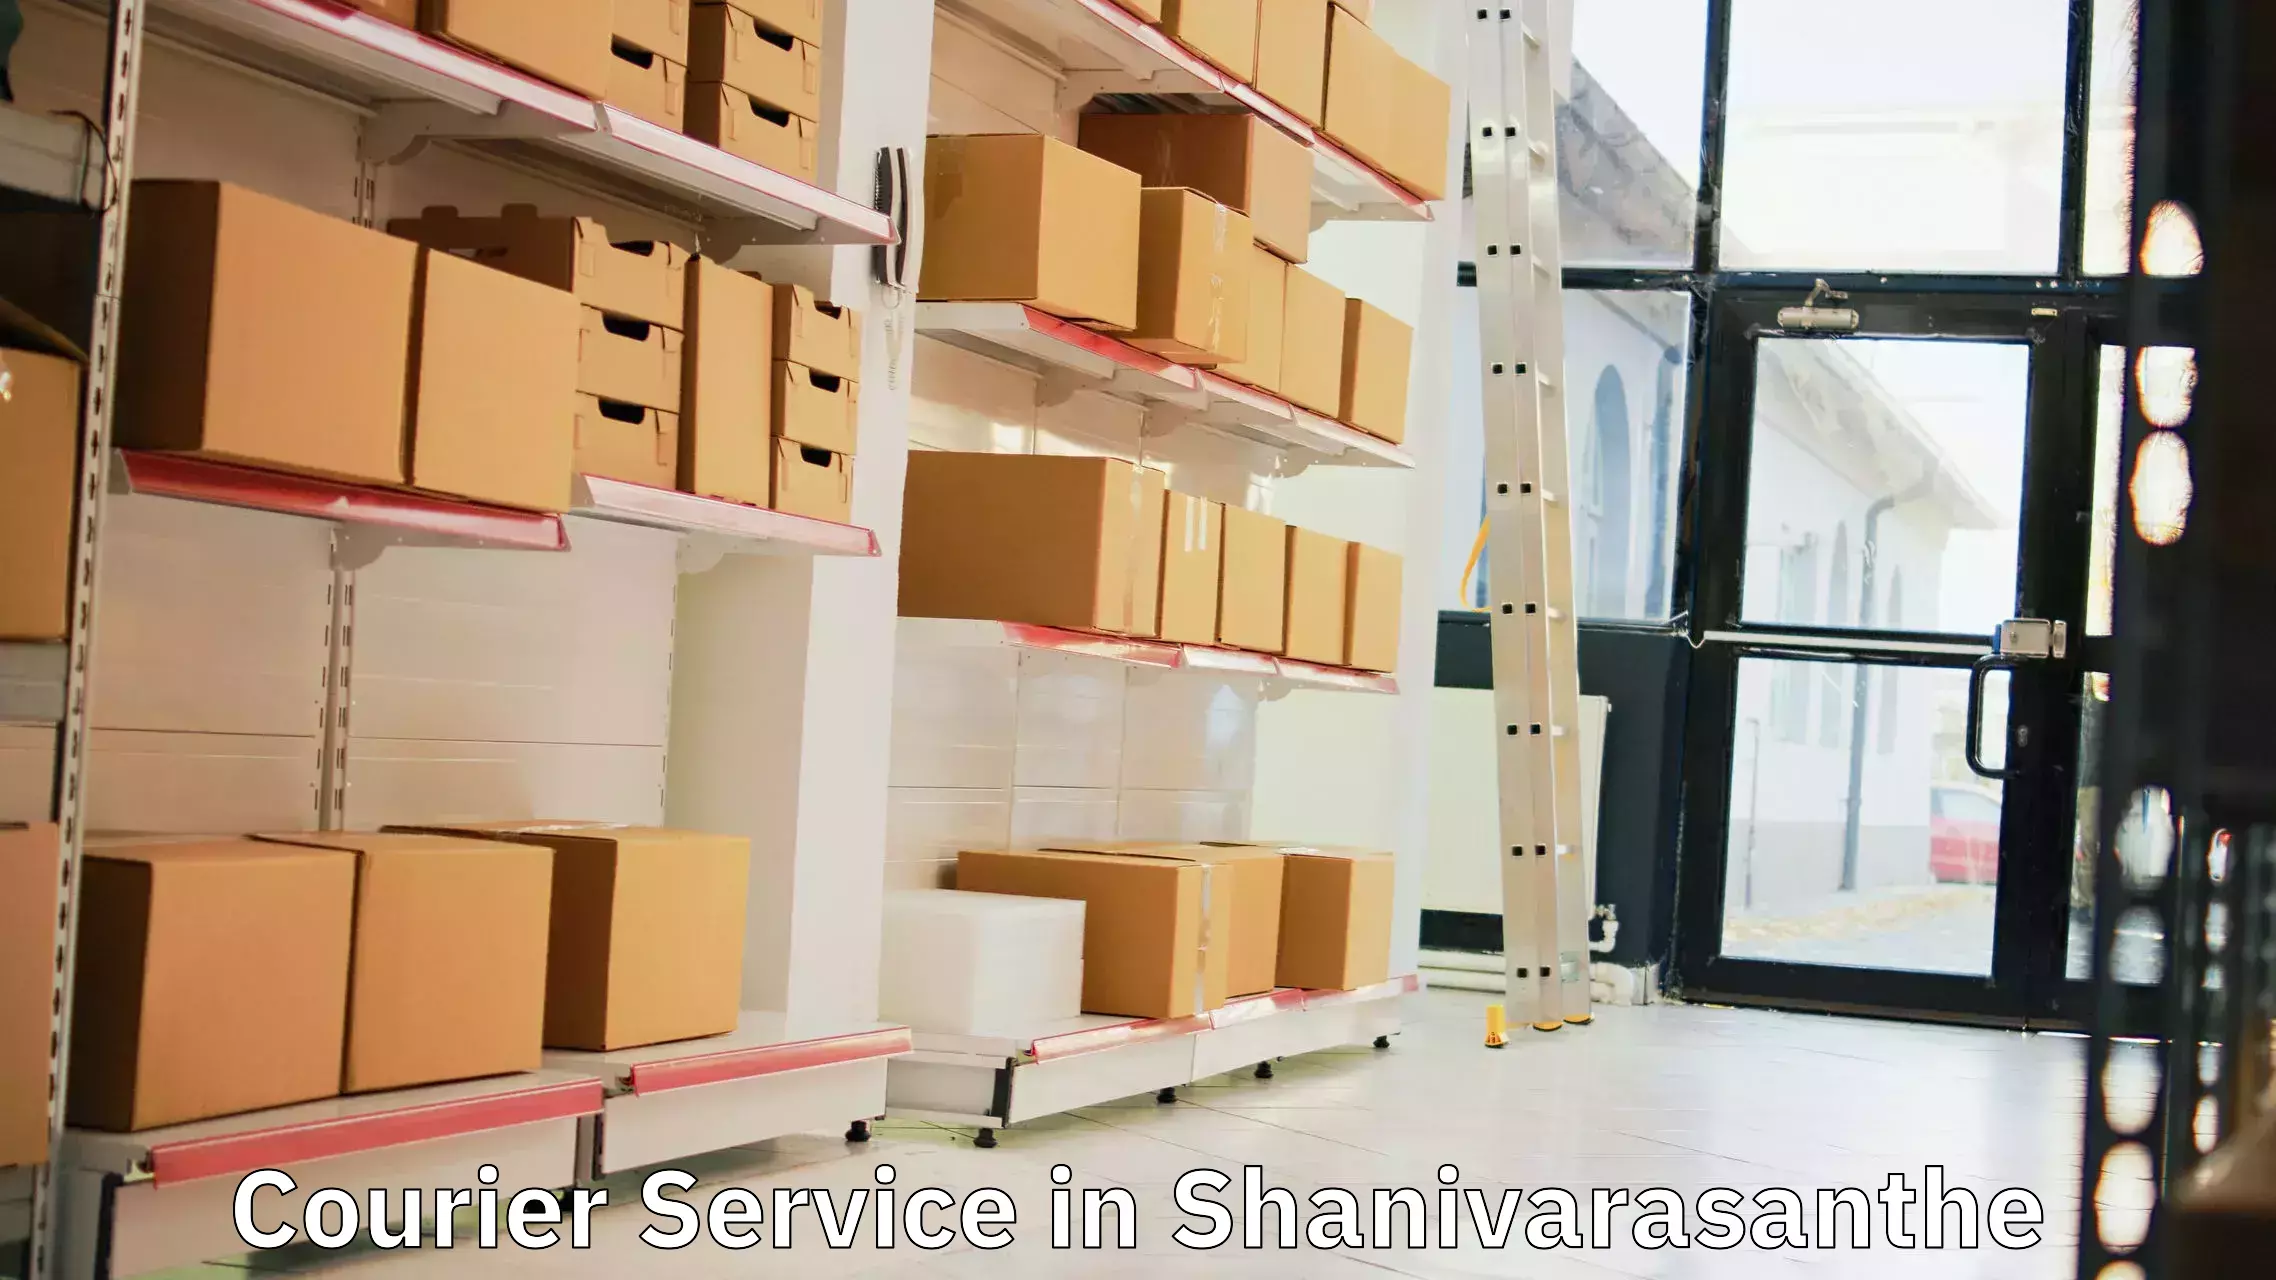 Scheduled delivery in Shanivarasanthe